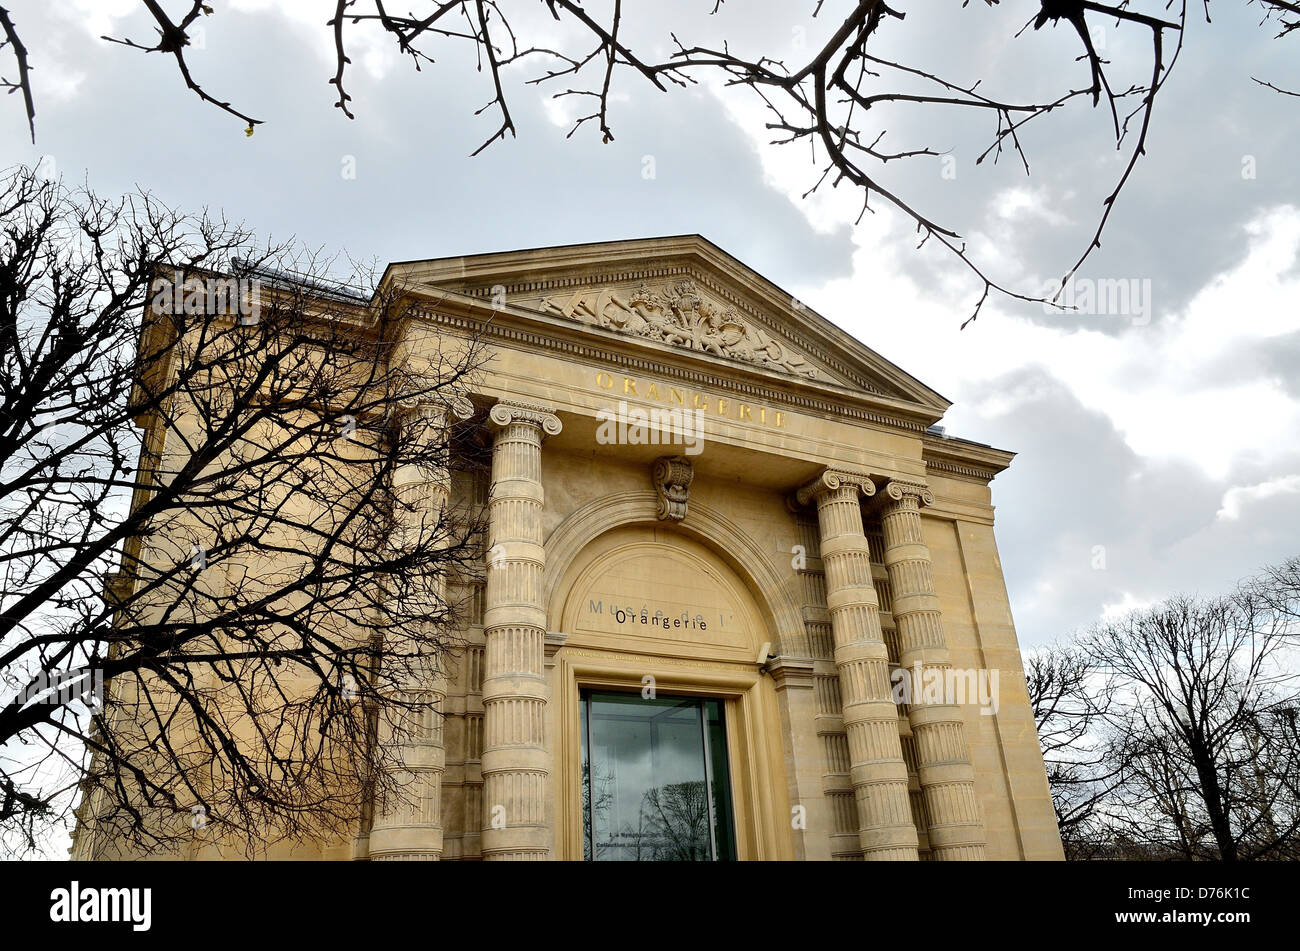 Facade of the Musee de l'Orangerie central Paris France Stock Photo